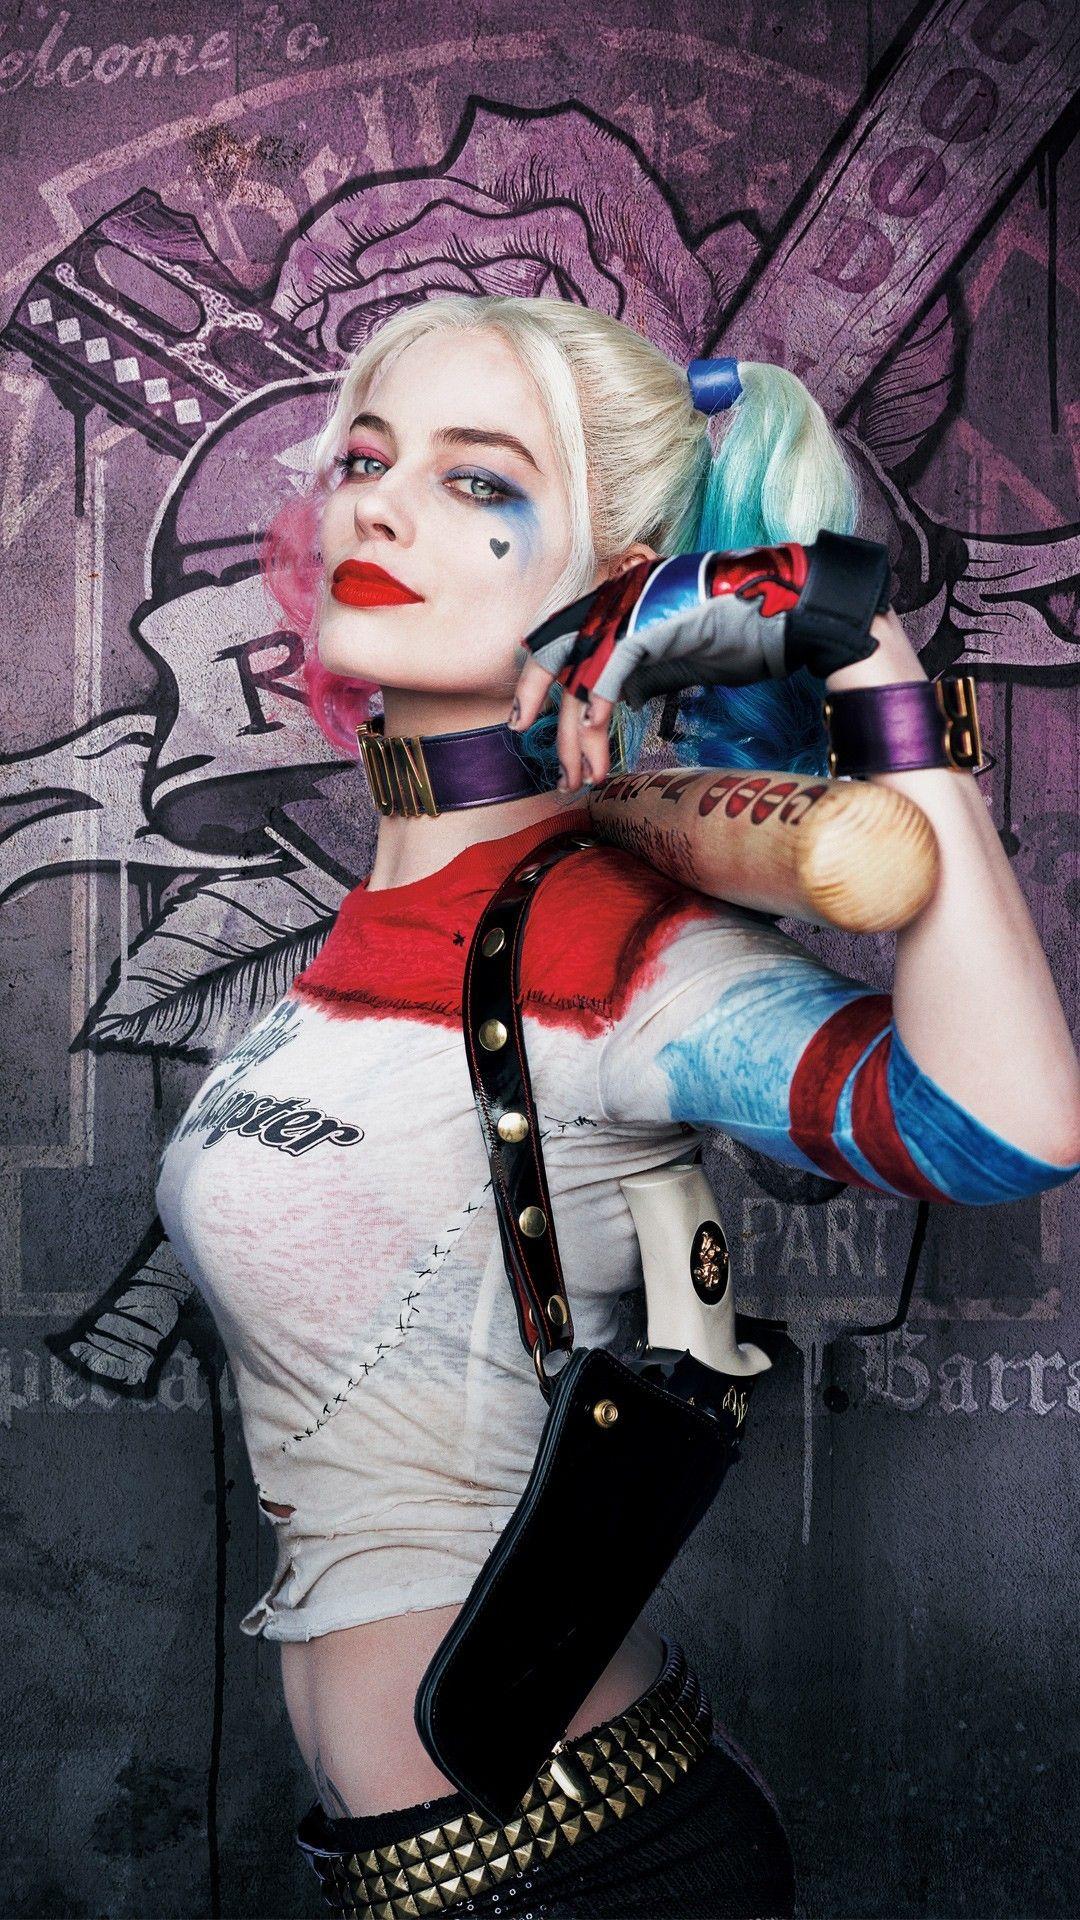 Joker And Harley Quinn Hd Wallpapers For Mobile